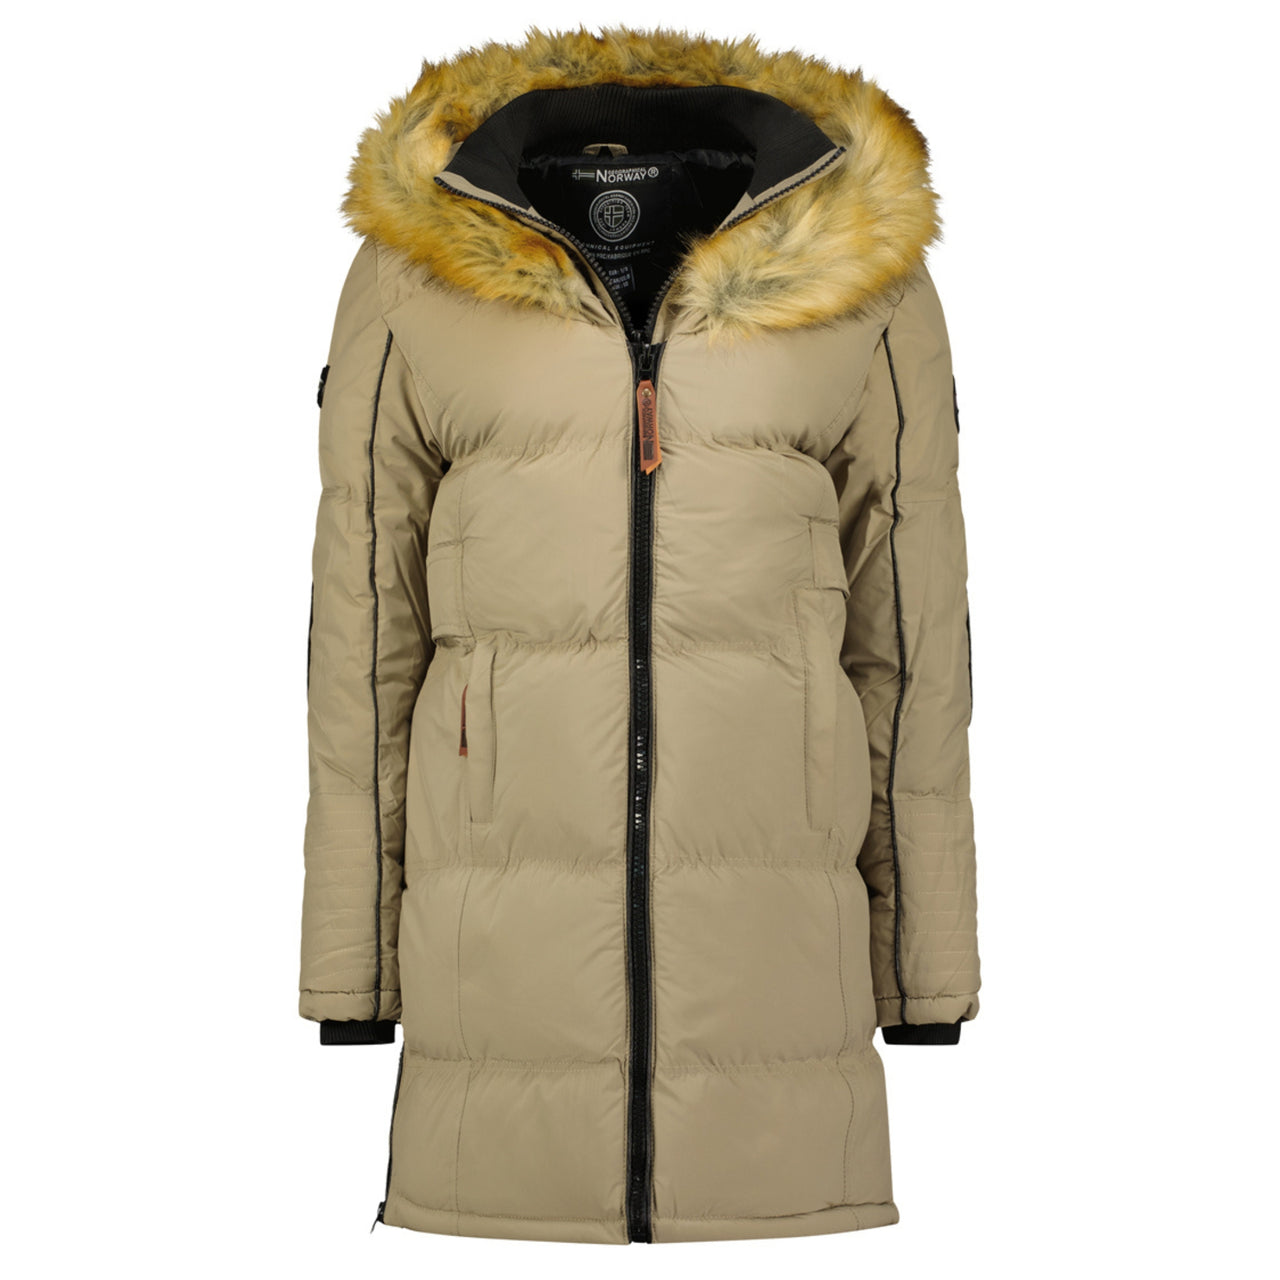 Geographical Norway BEAUTIFUL Mujer/Women - Chaqueta/Abrigo Mujer, Parka -  Chaqueta polar chic para invierno, chaqueta larga para mujer